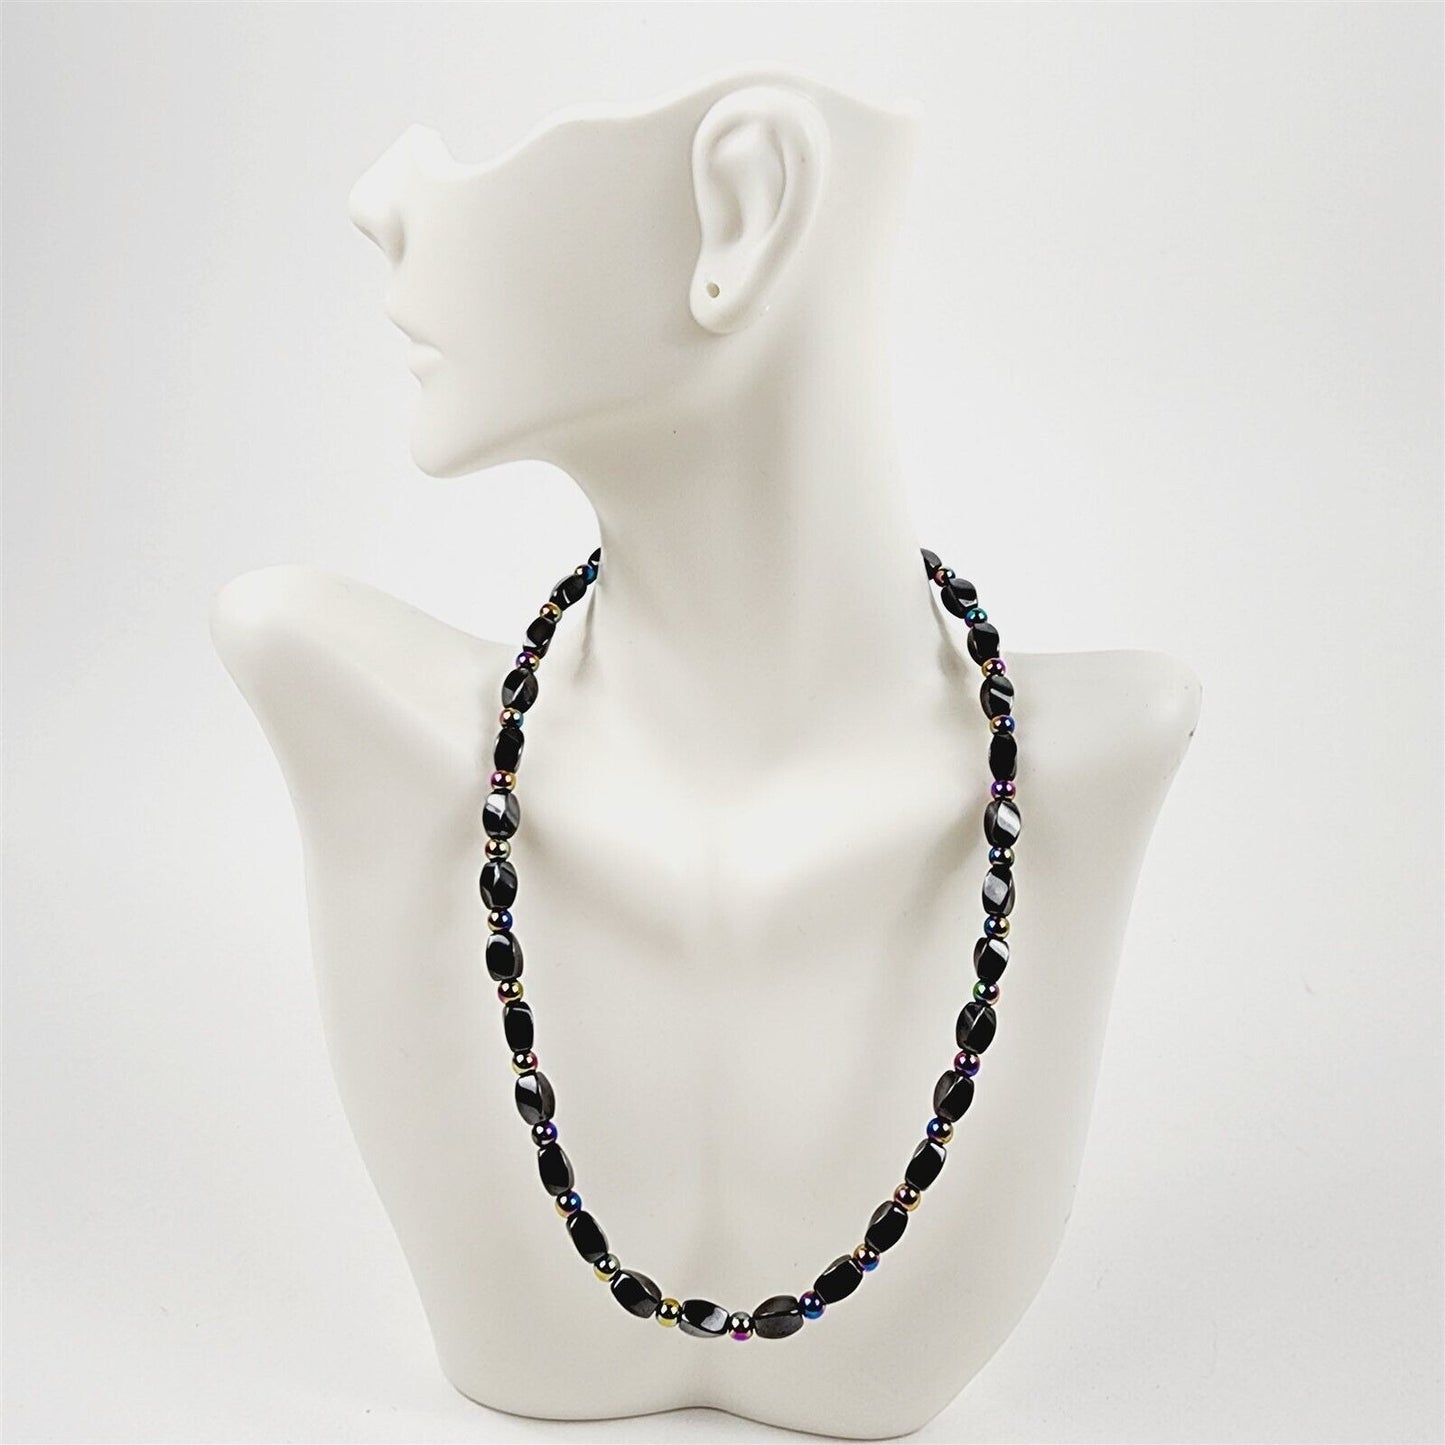 Black & Rainbow Short Twist Magnetic Beaded Necklace Therapeutic Handmade